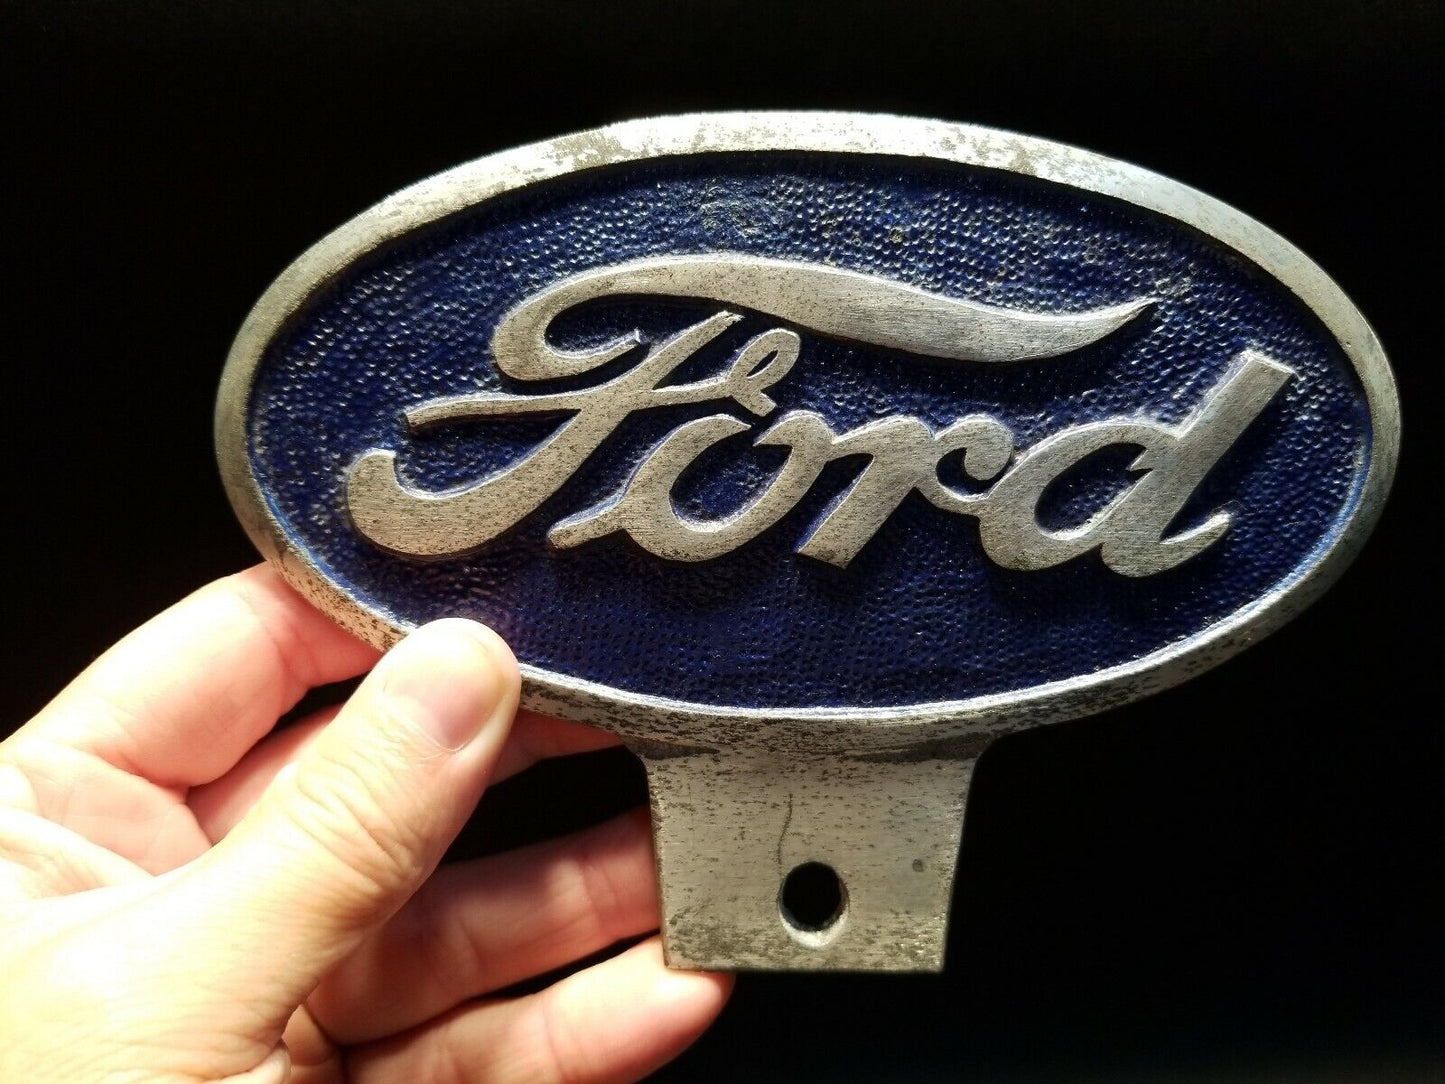 Antique Vintage Style Cast Aluminum Ford Car License Plate Fob Topper